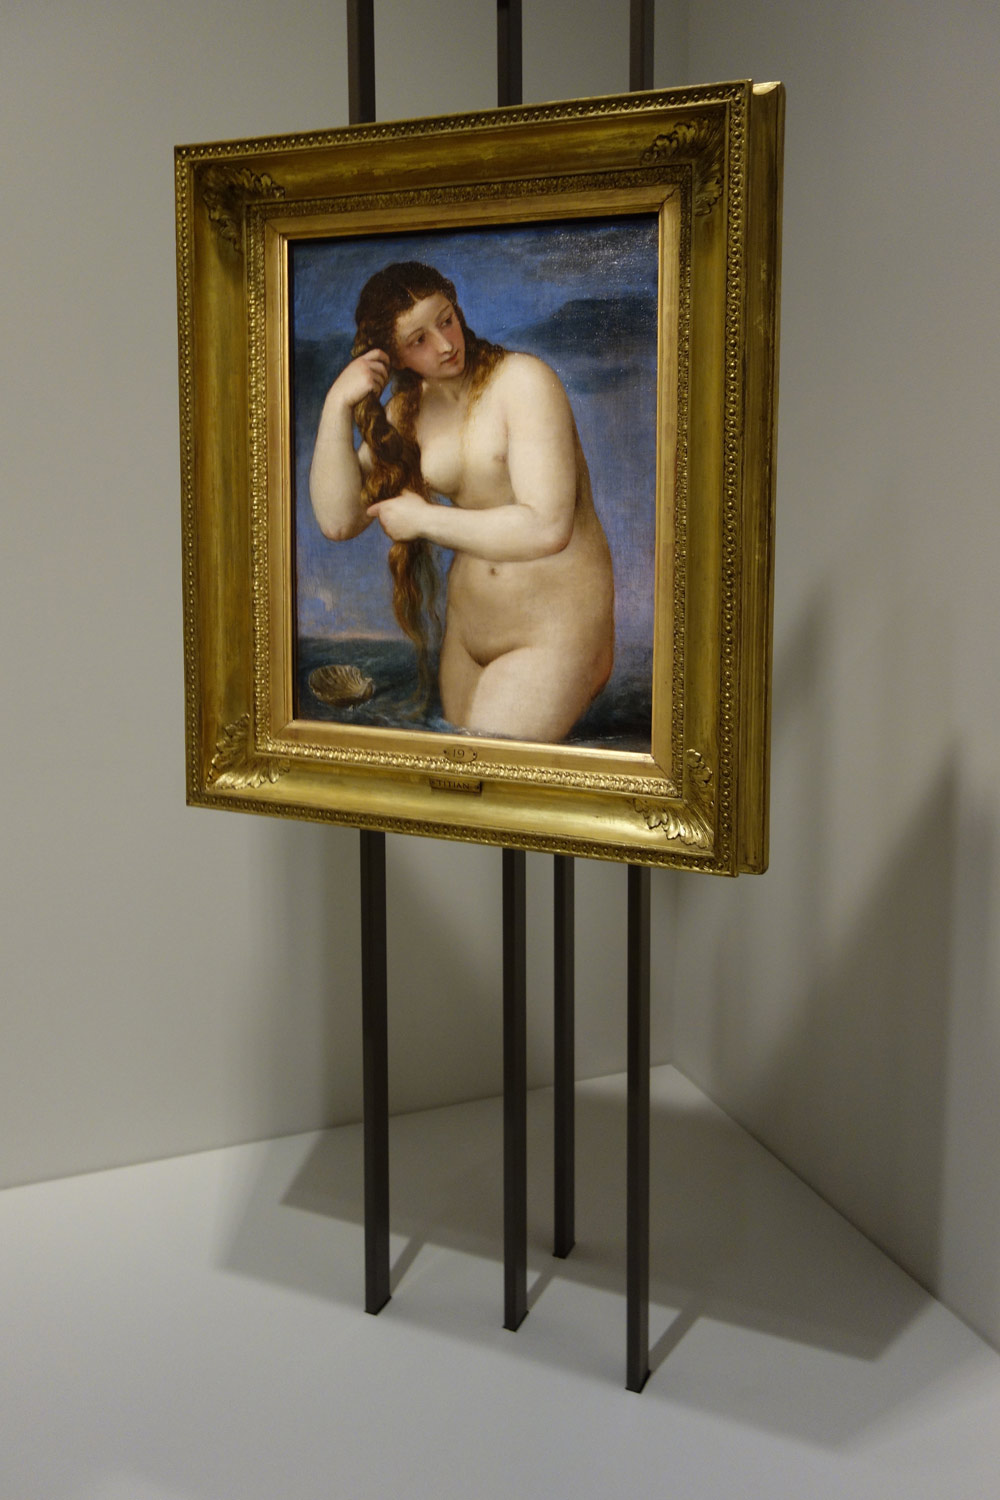 Young ben tennyson naked - Porn galleries